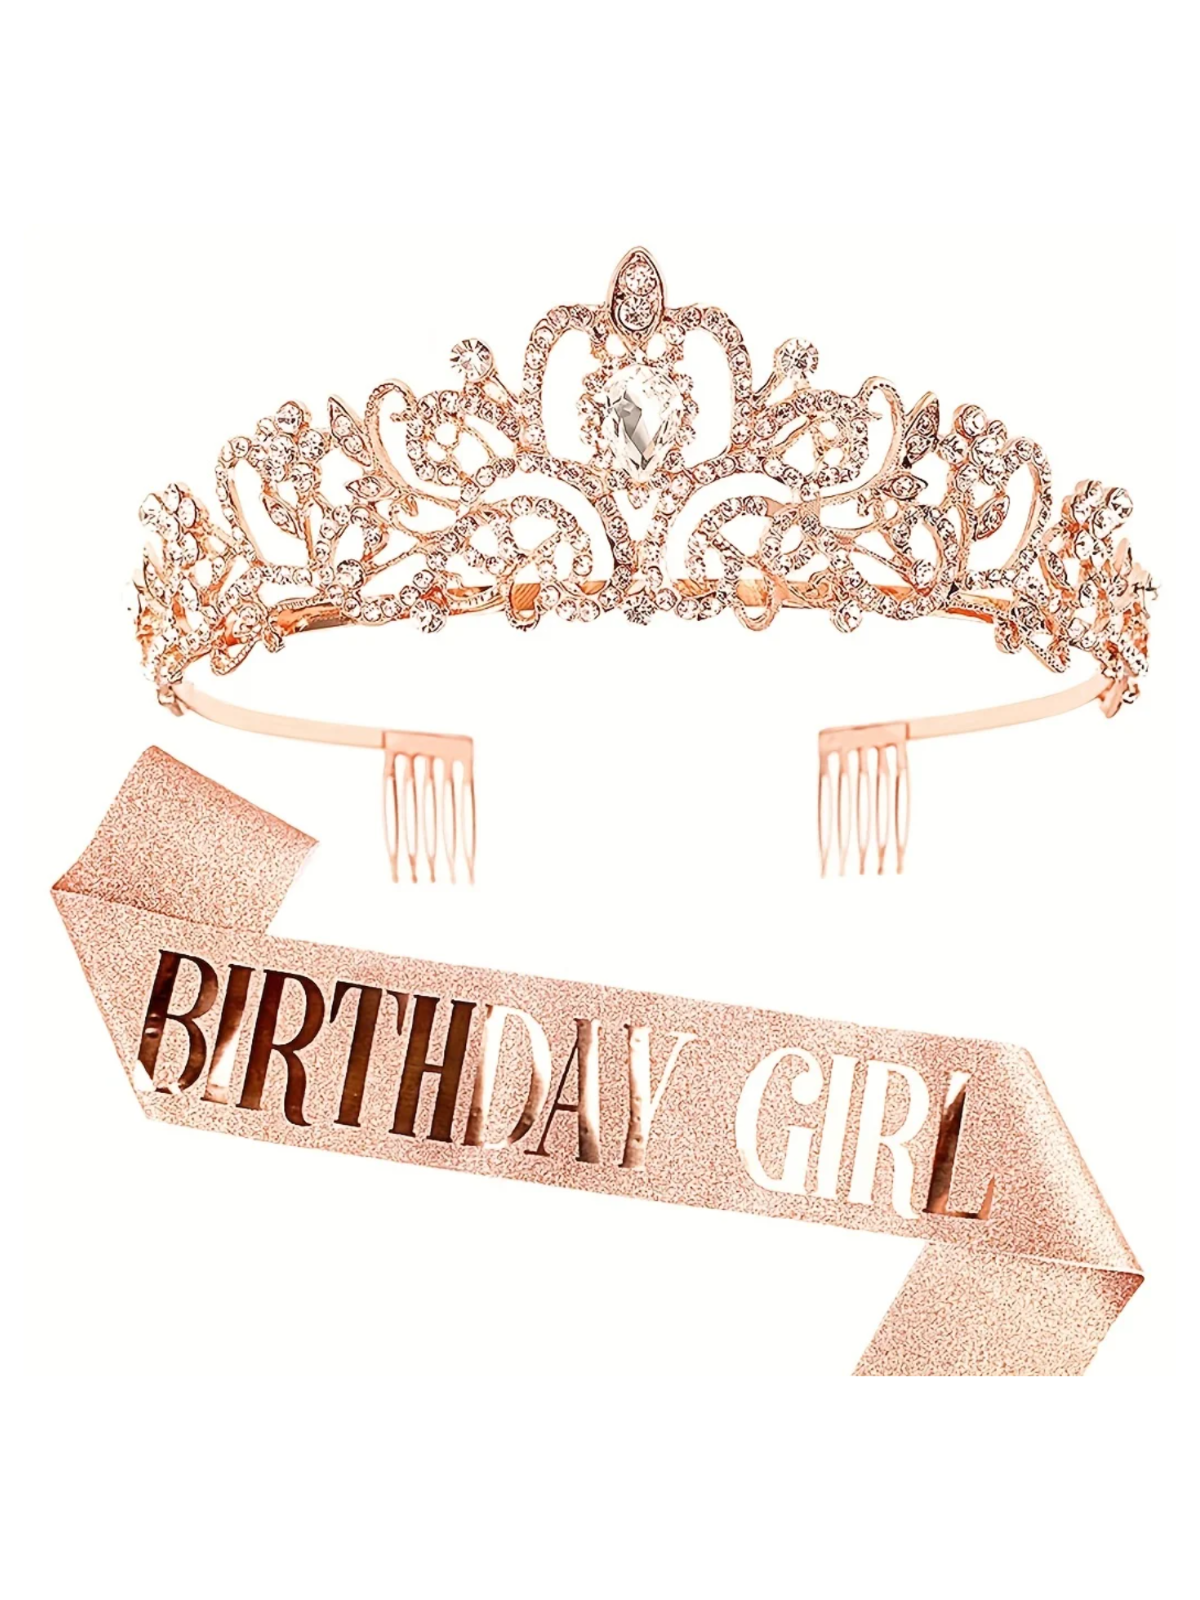 Birthday Queen Accessory Kit - Rhinestone Crown and Glitter Sash